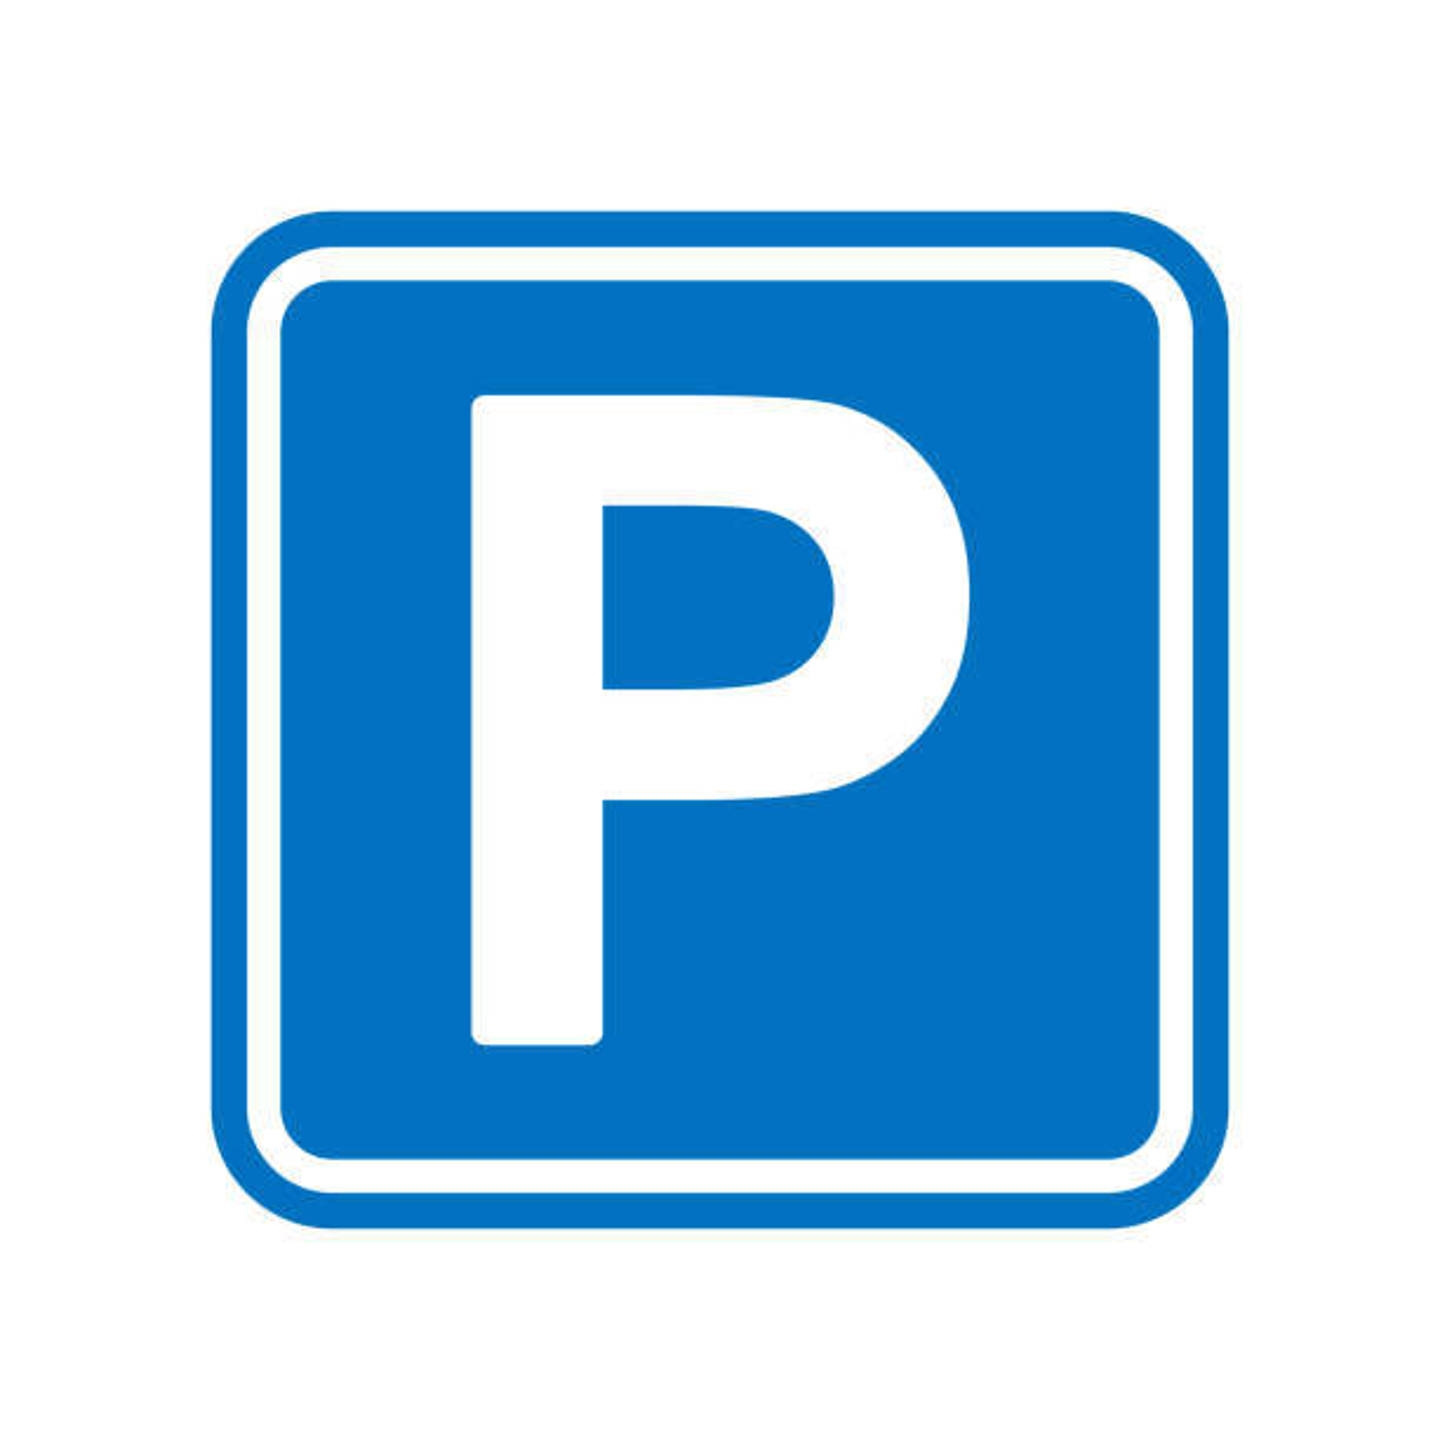 Parking te  koop in Sint-Lambrechts-Woluwe 1200 72100.00€  slaapkamers 12.50m² - Zoekertje 1324761